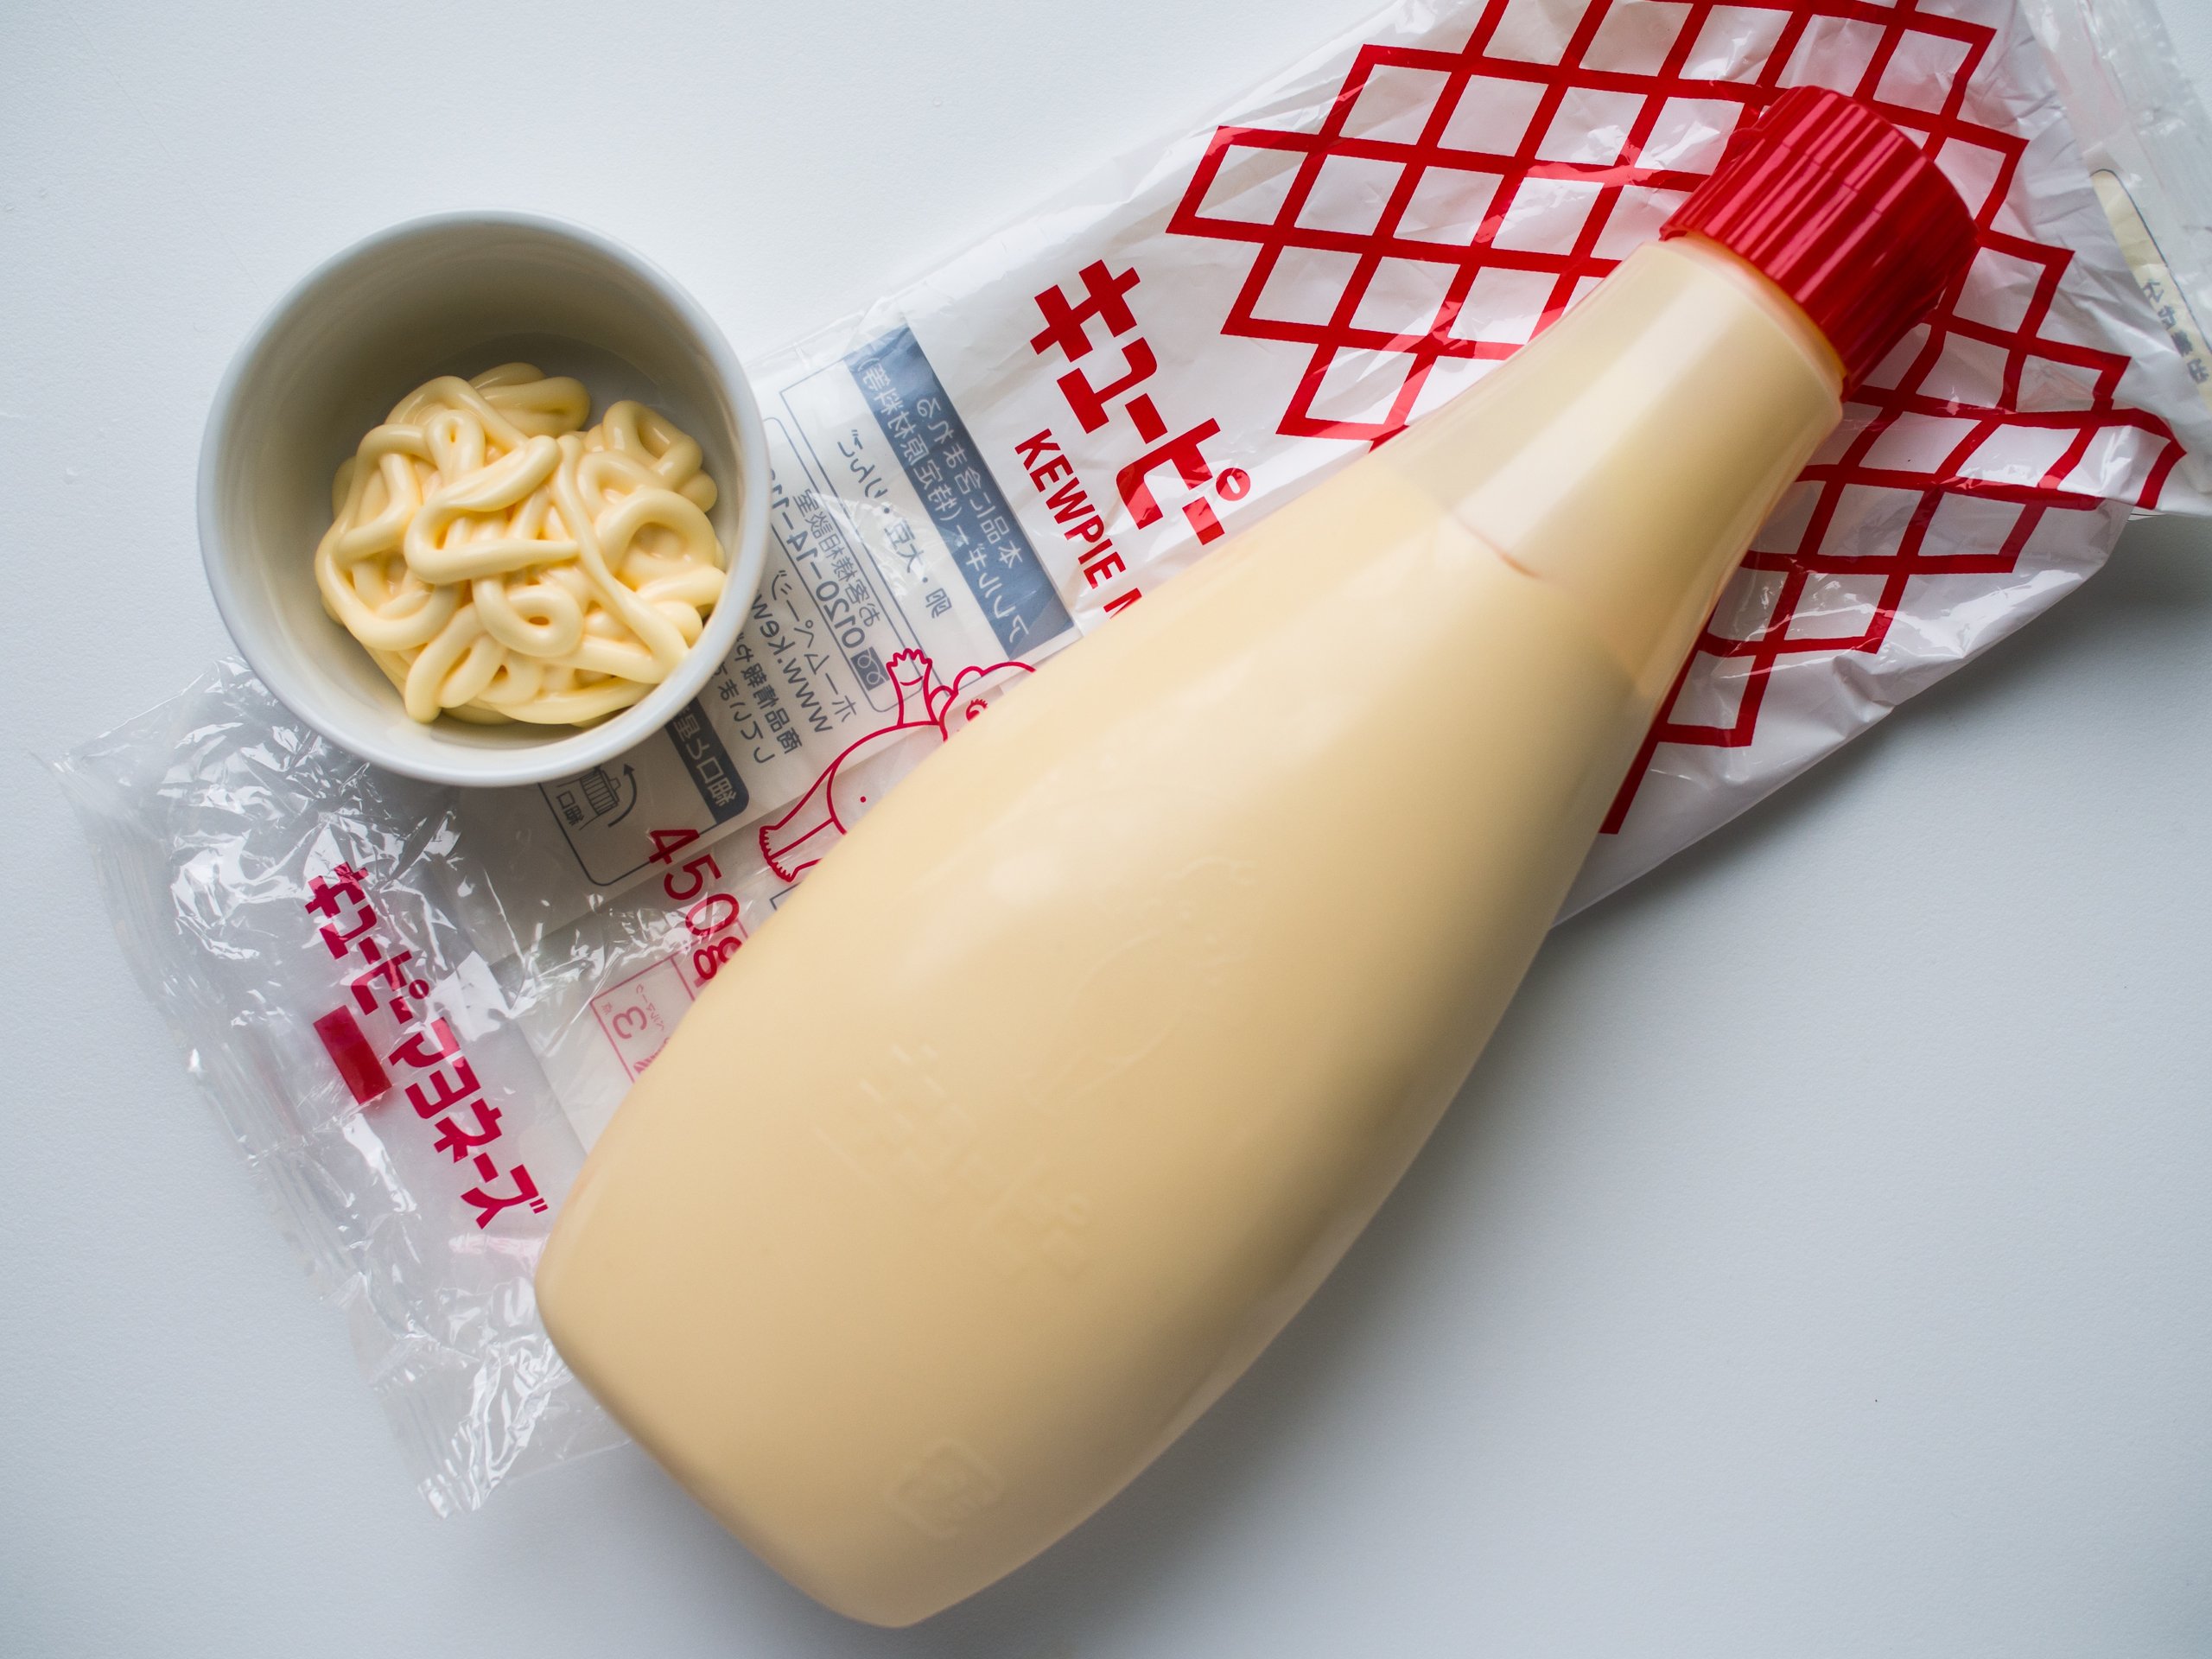 2016 0529 kewpie mayonnaise nl.jpg?resize=412,232 - Japon : Kewpie Mayo Cafe, la chaine de restaurants dédiés à la mayonnaise